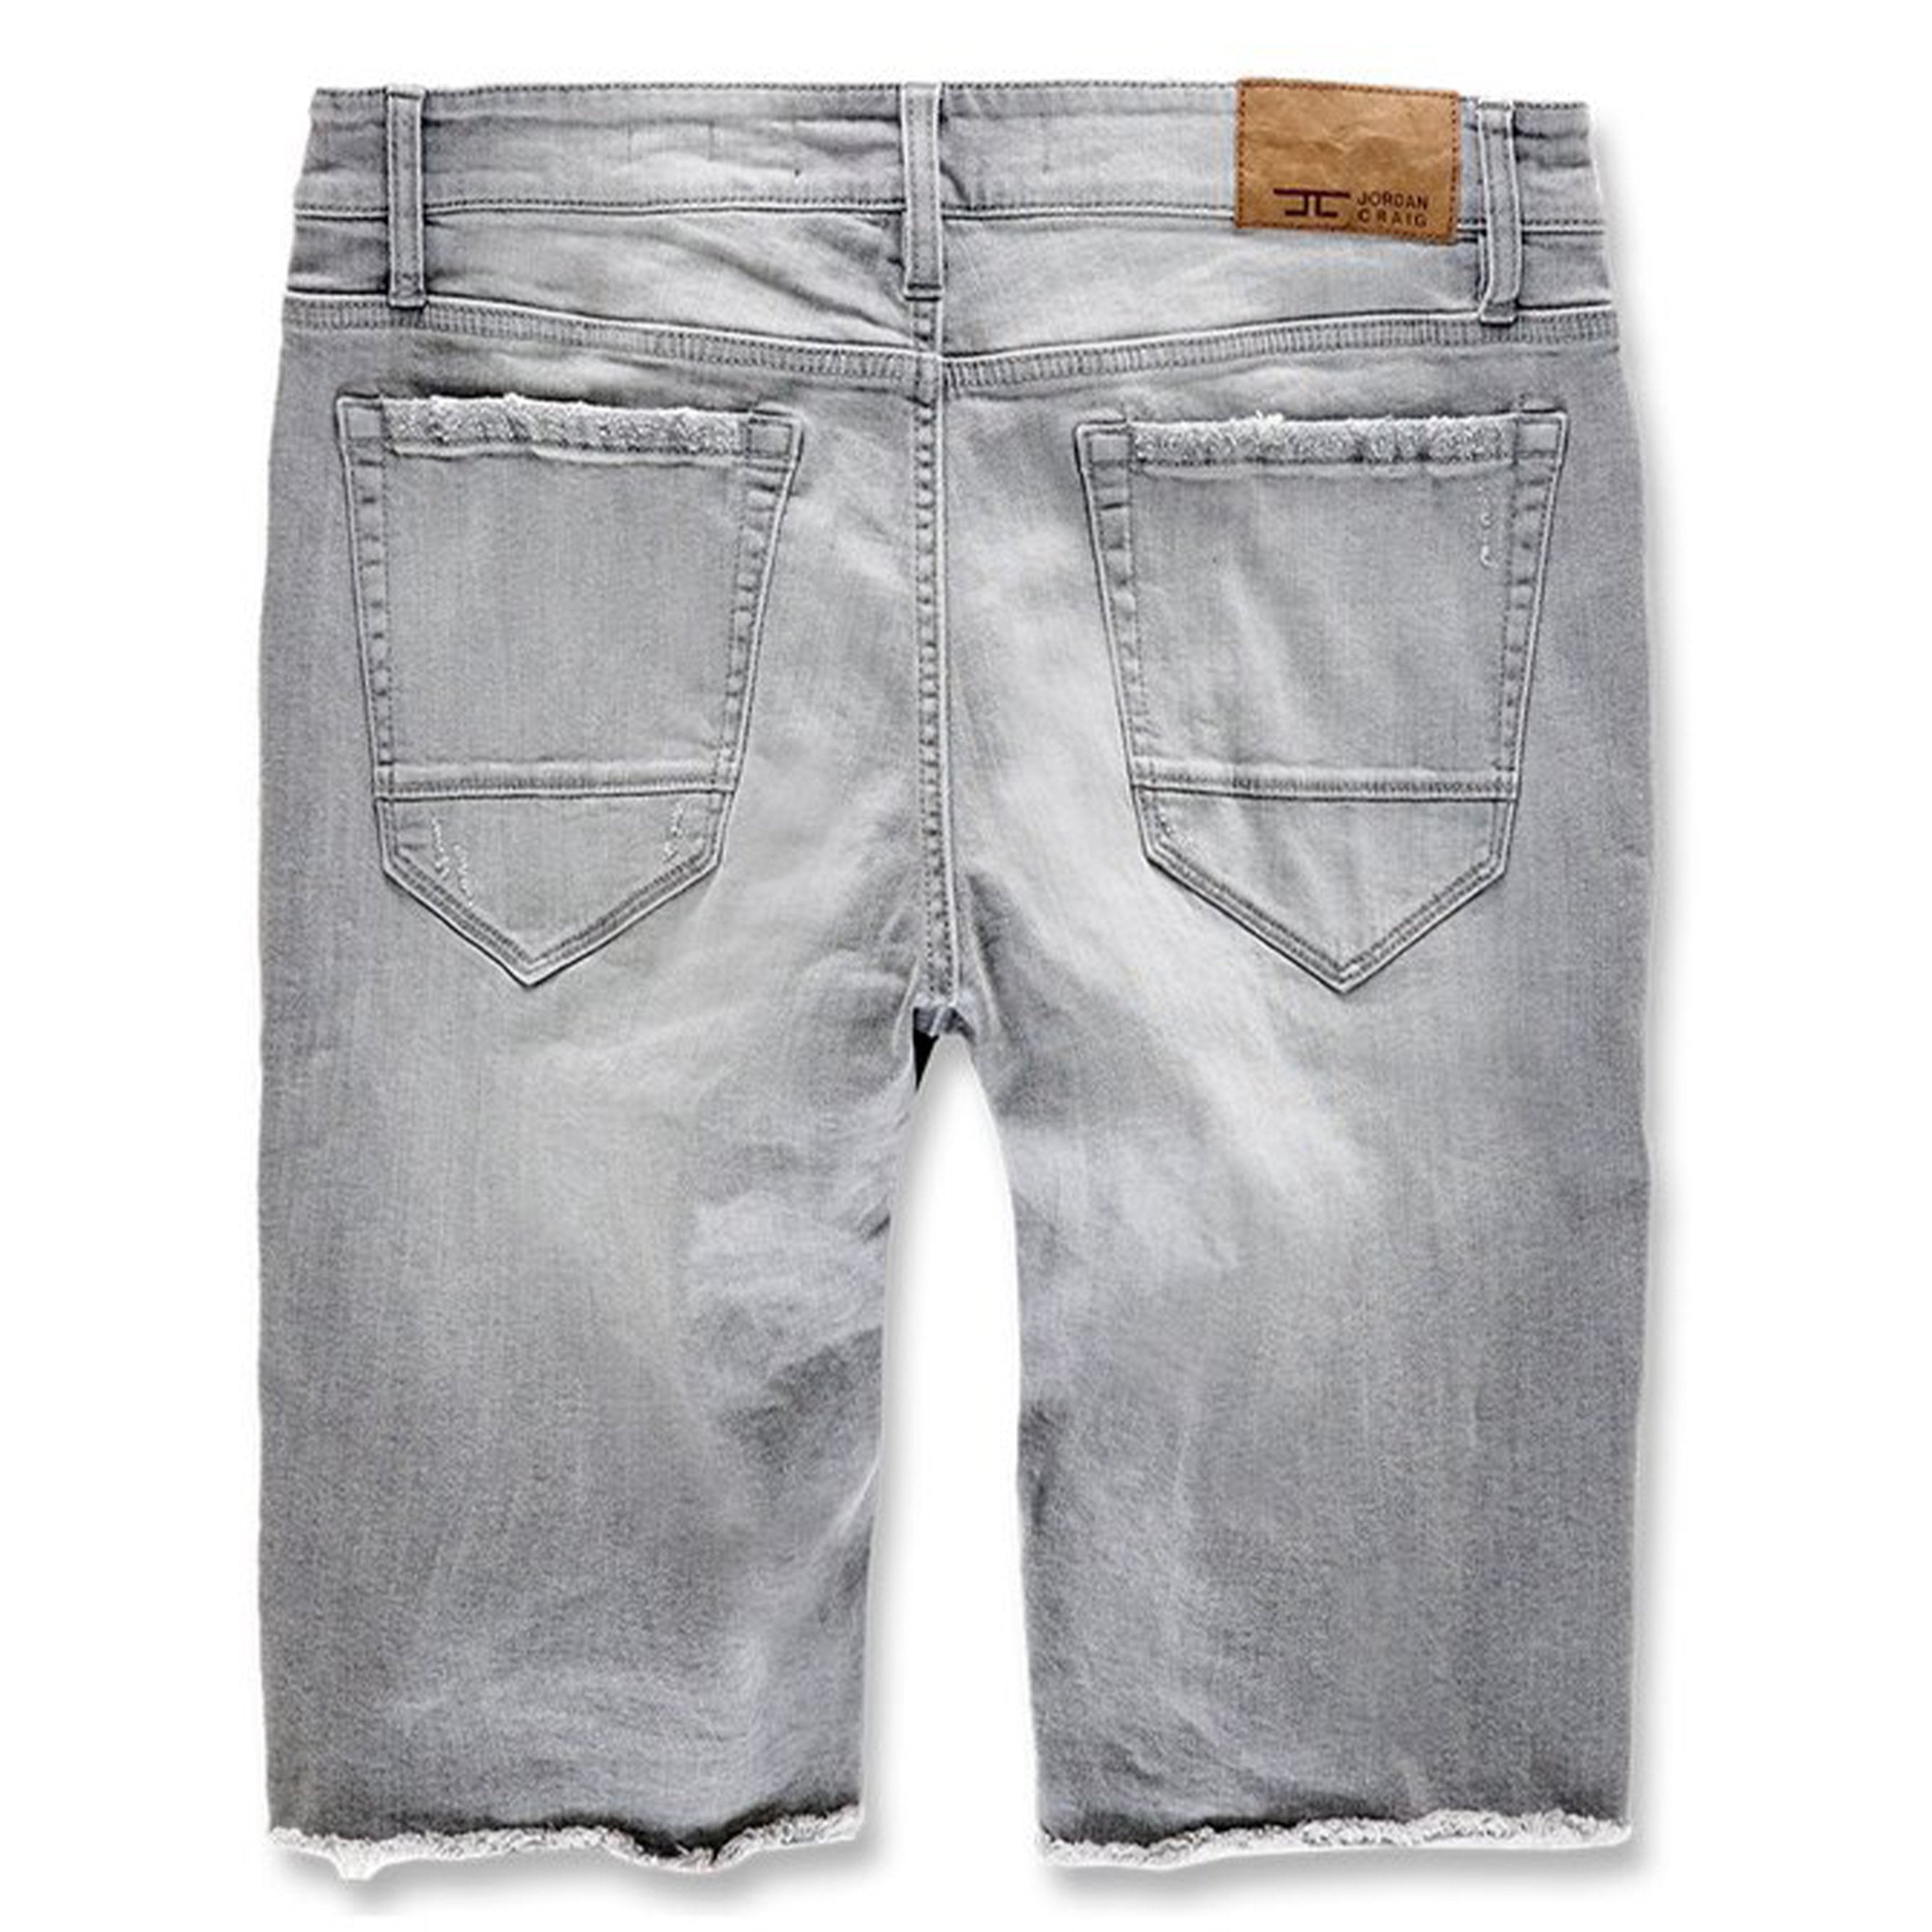 Get the best deals on Jordan Craig Men's Shorts when you shop the largest online selection at